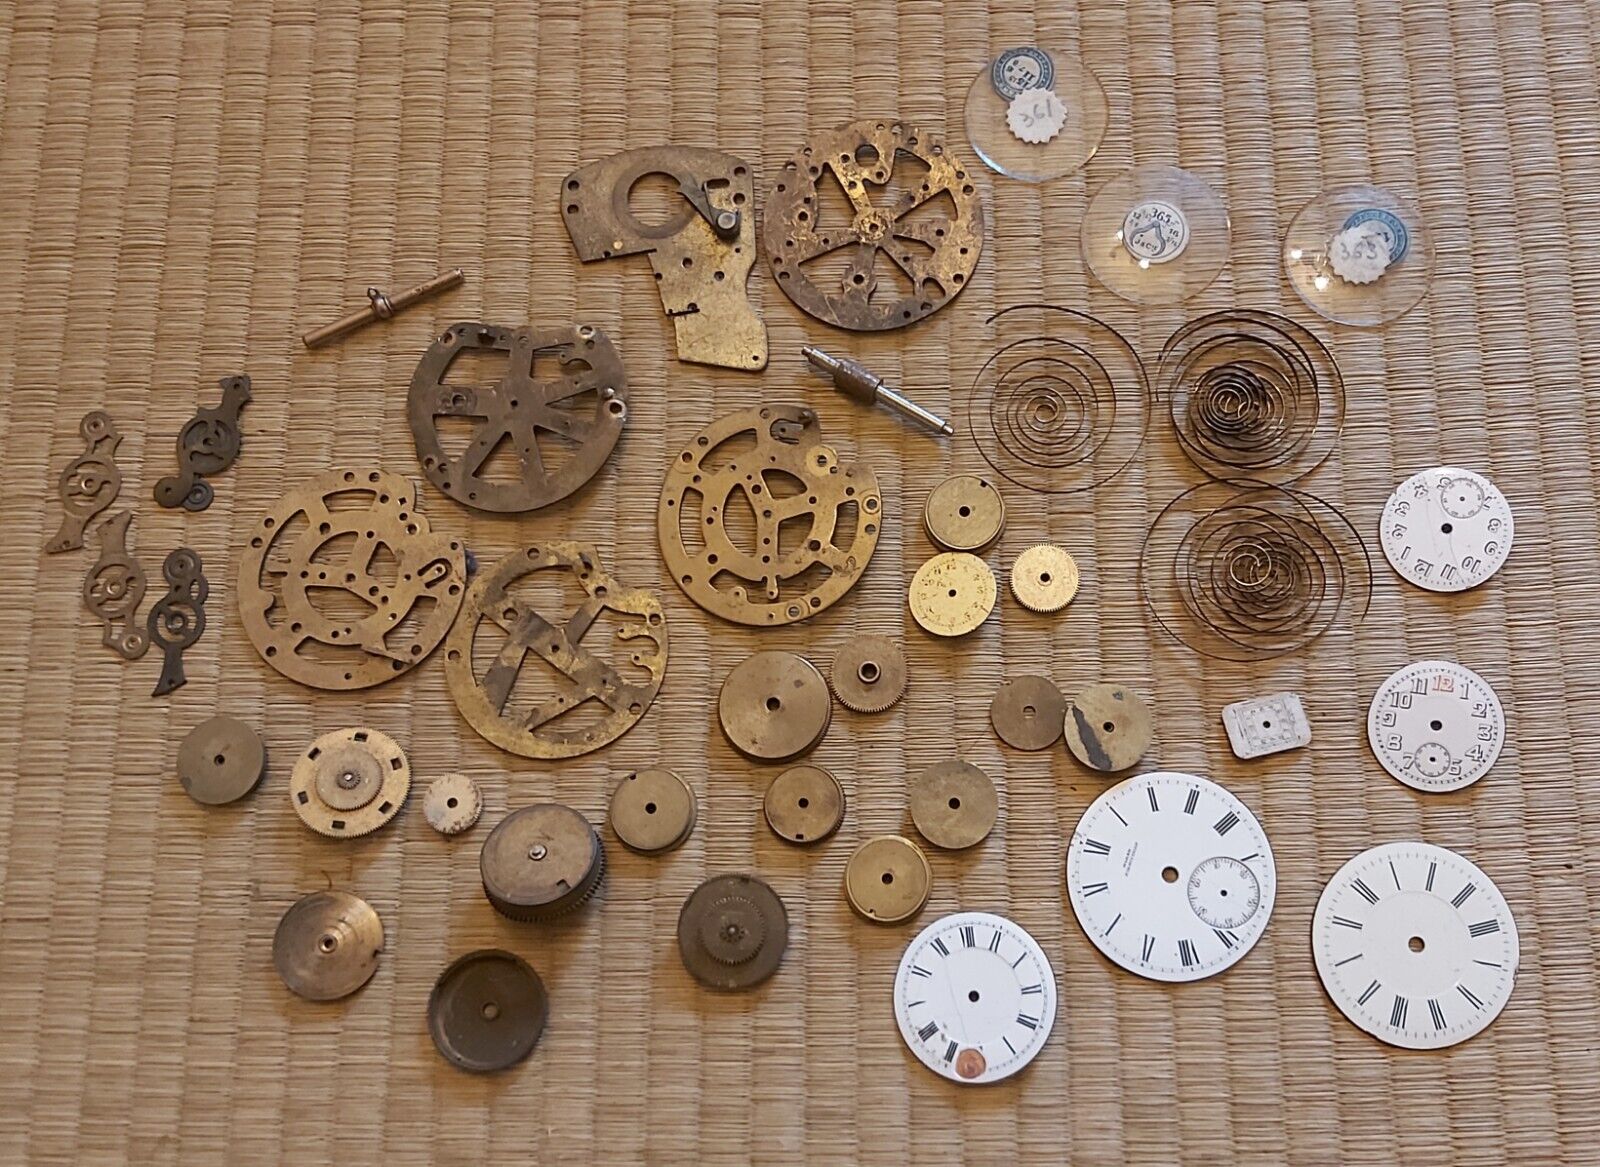 Antique / Vintage Job Lot Of Miscellaneous Clock & Watch Parts, Cabinet Find